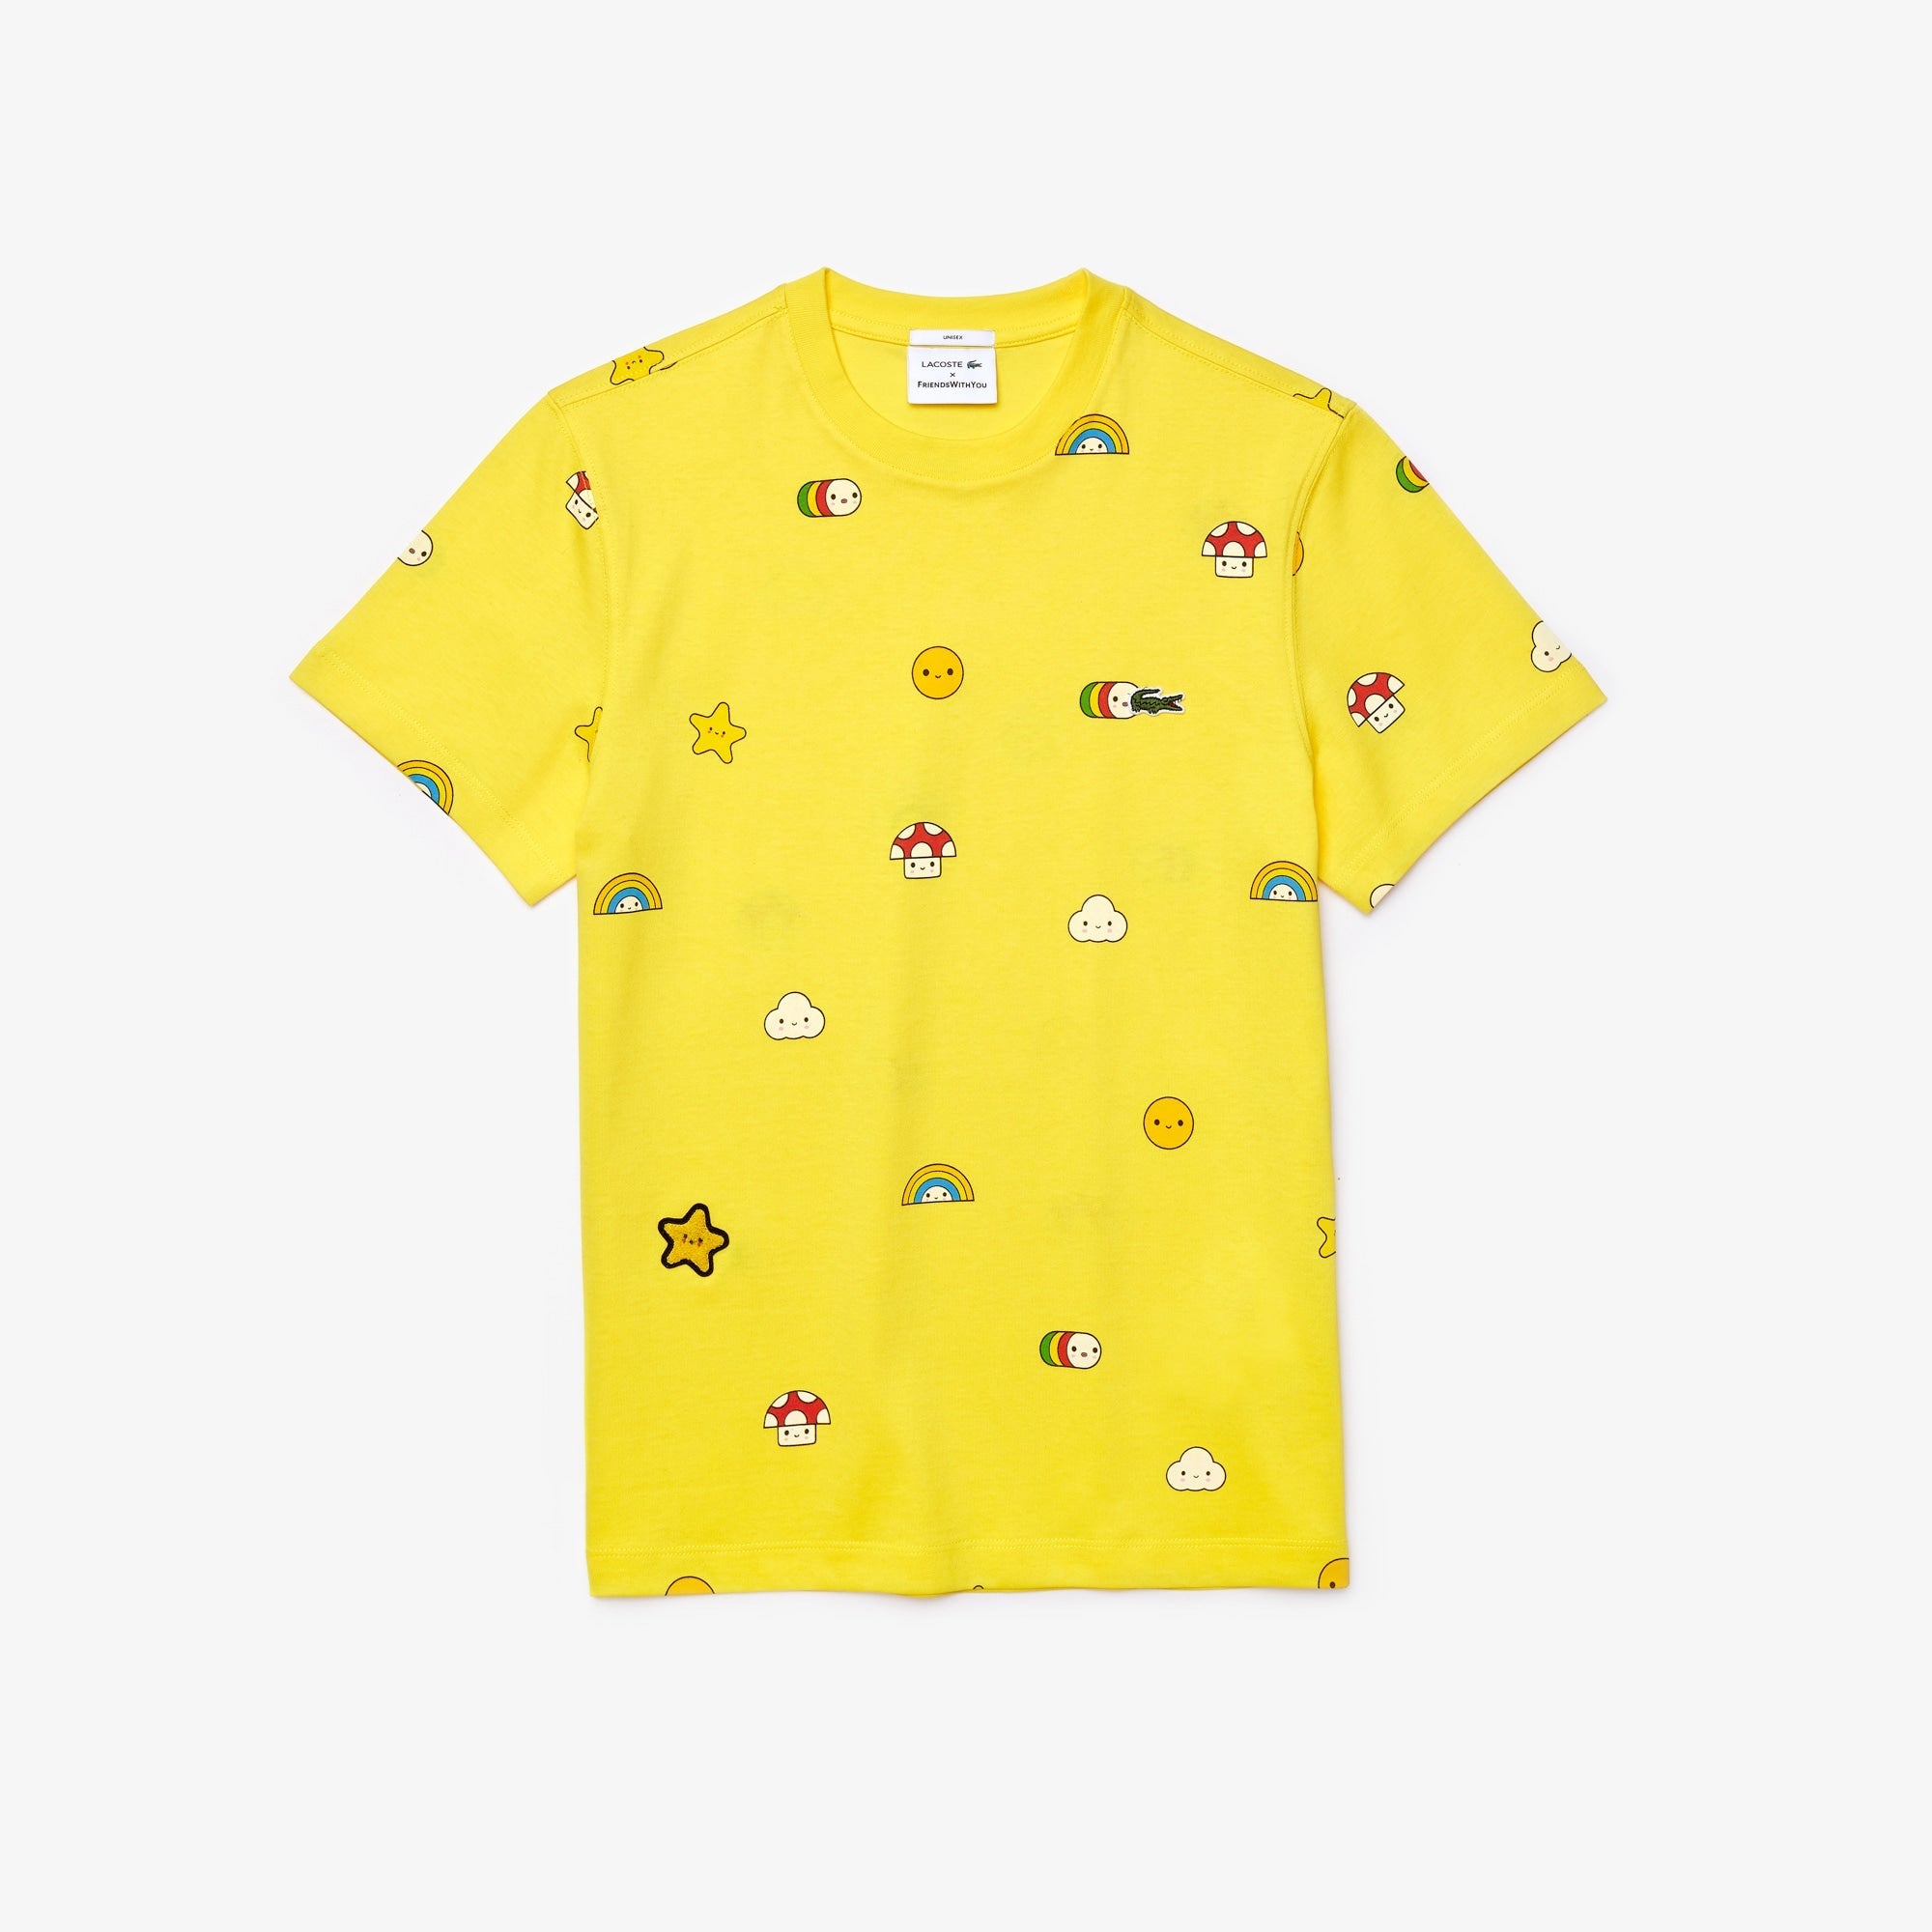 Lacoste Men's Color-block Logo T-Shirt, Brand Size 4 (Medium) TH5103-10-XP2  - Apparel - Jomashop